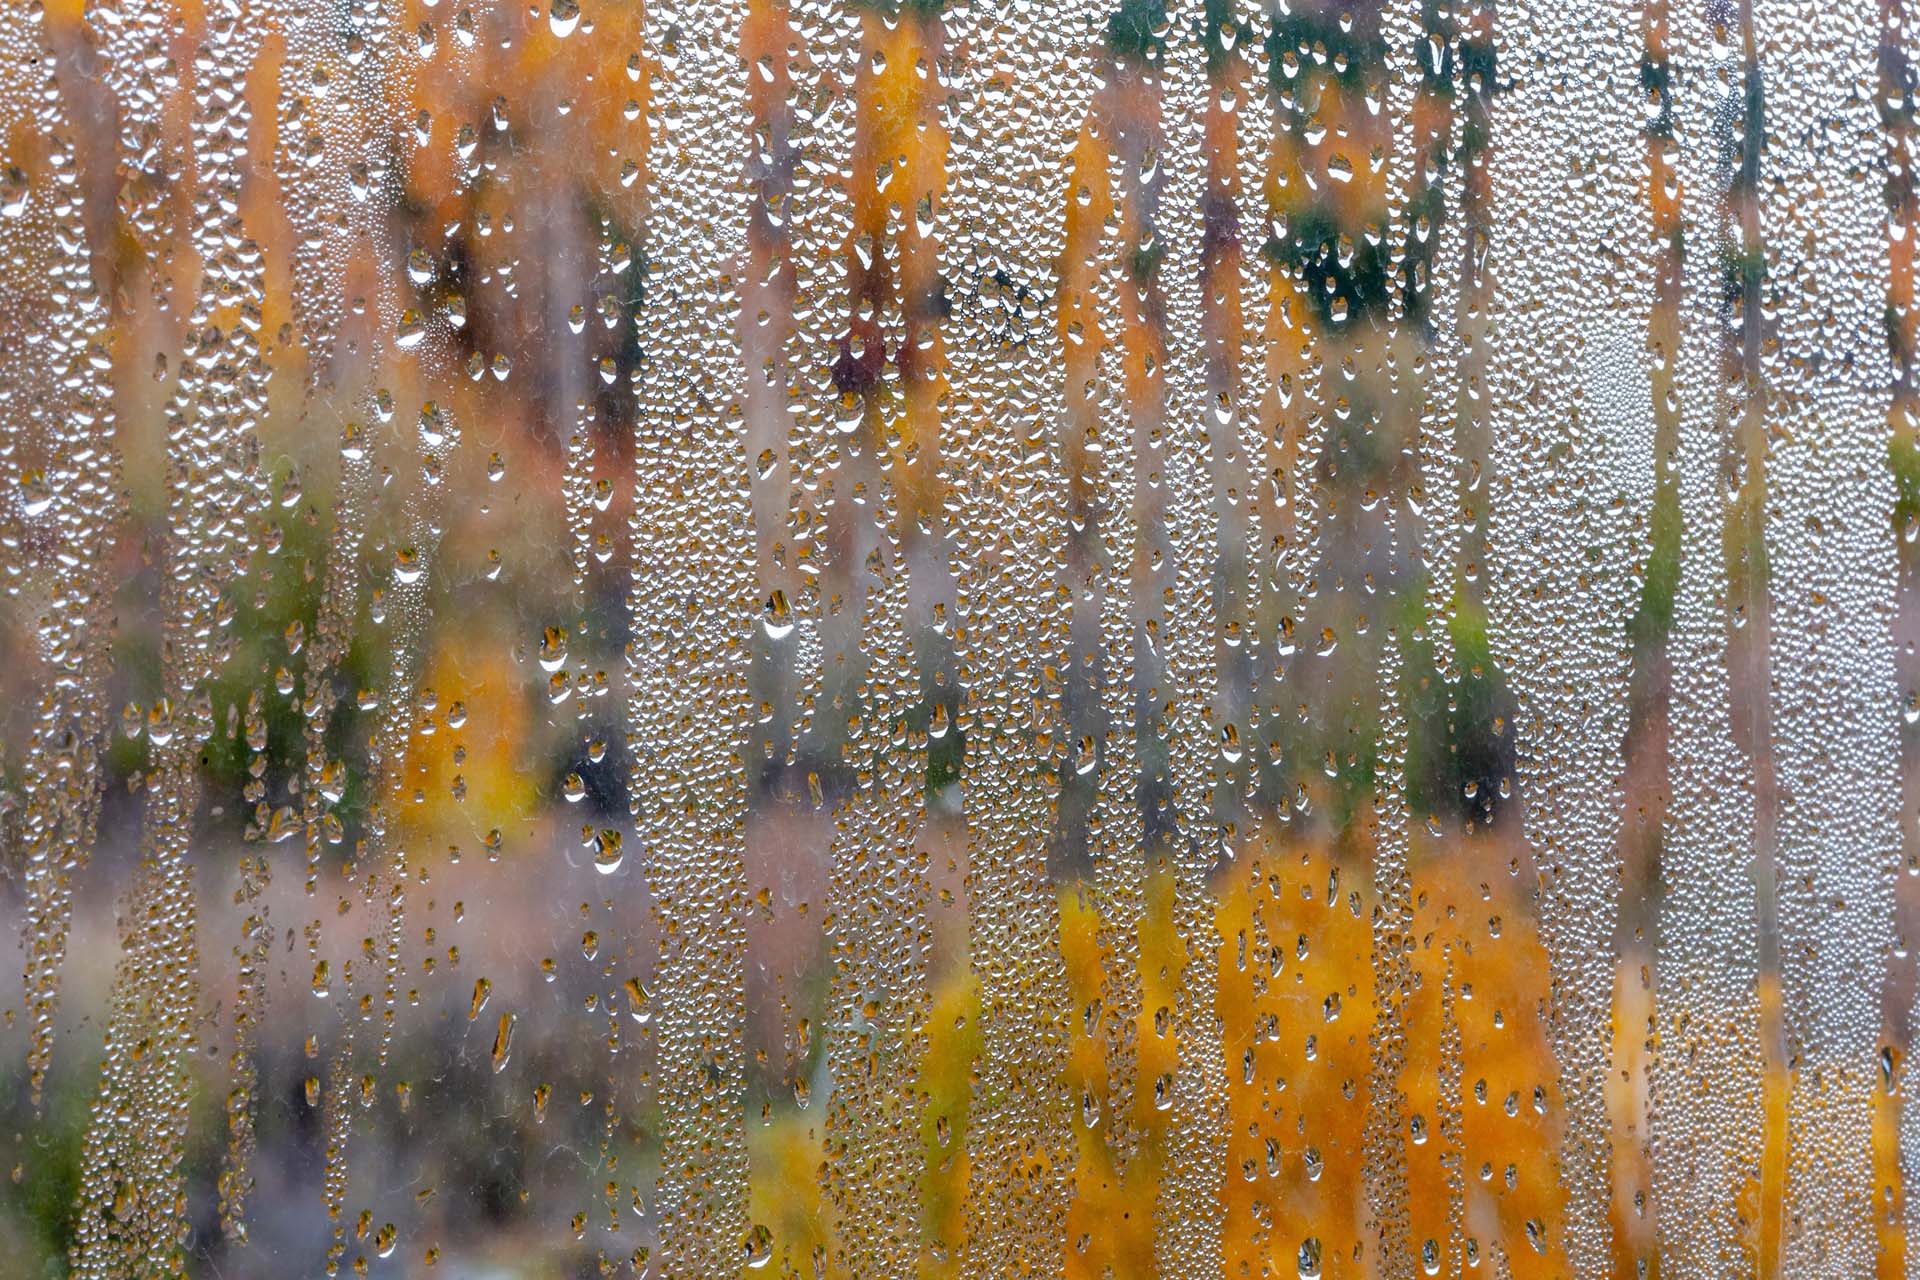 Heavy condensation on a window